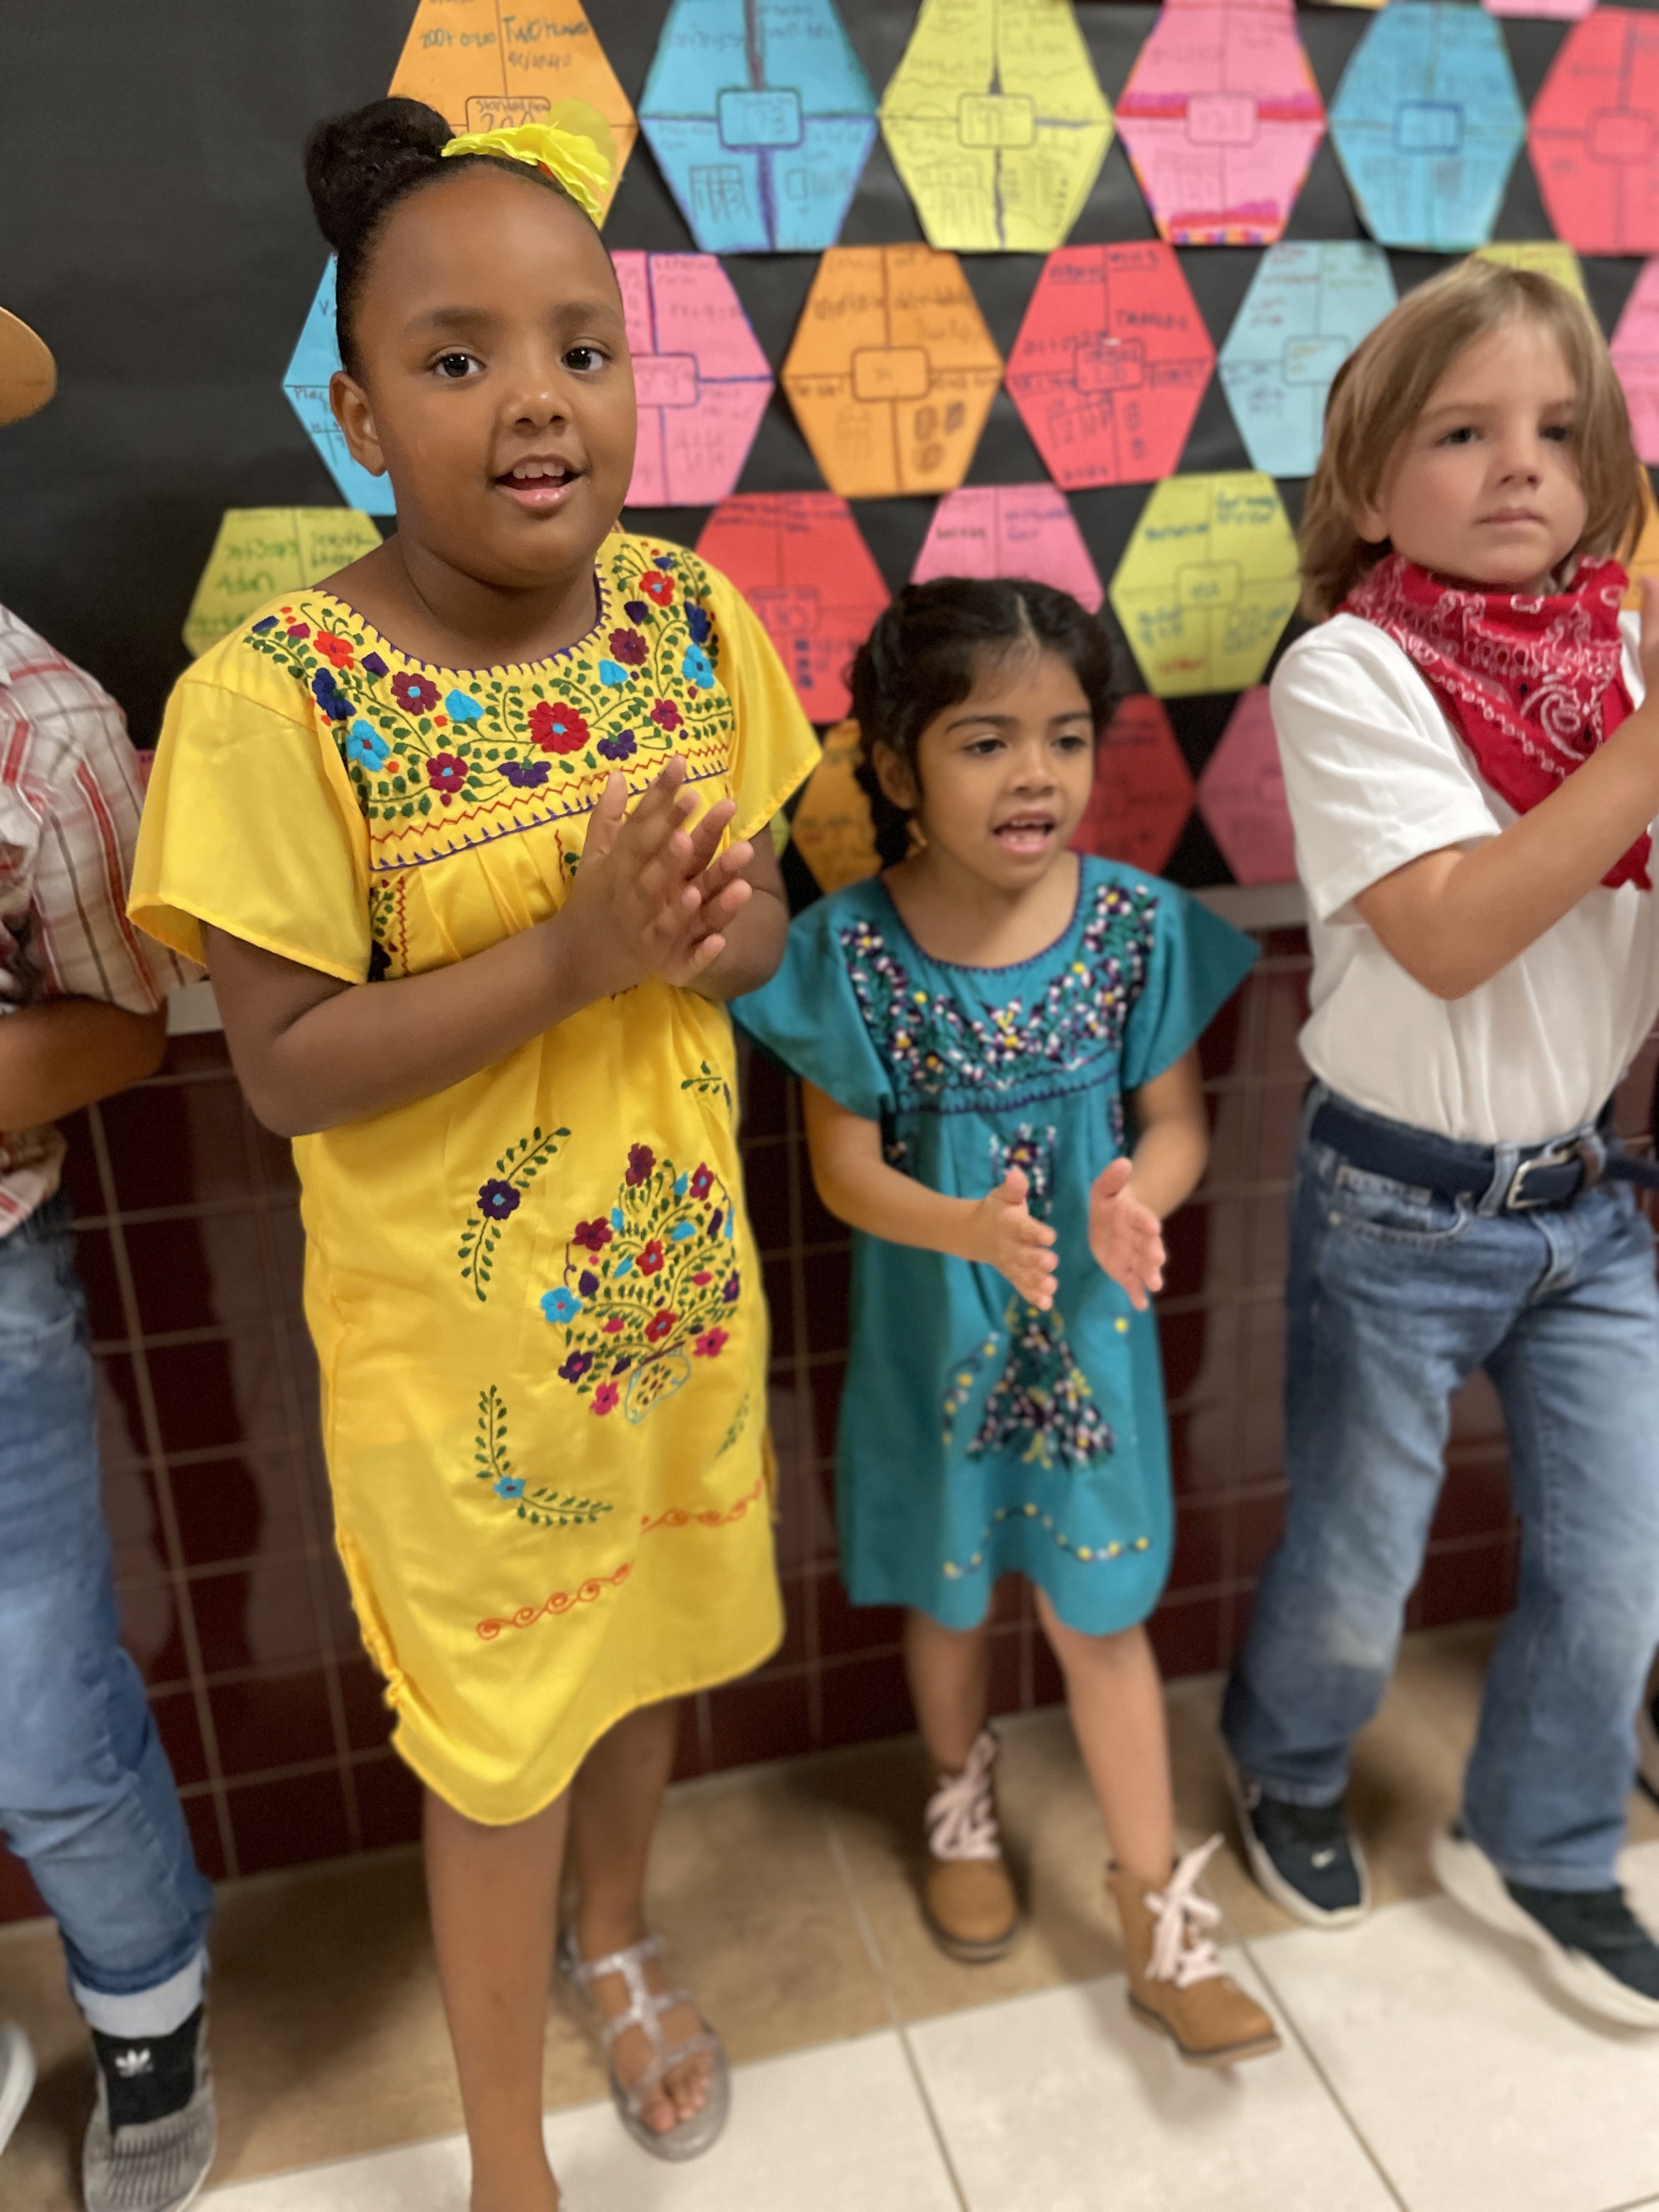 elementary aged children dressed in Hispanic traditional attire